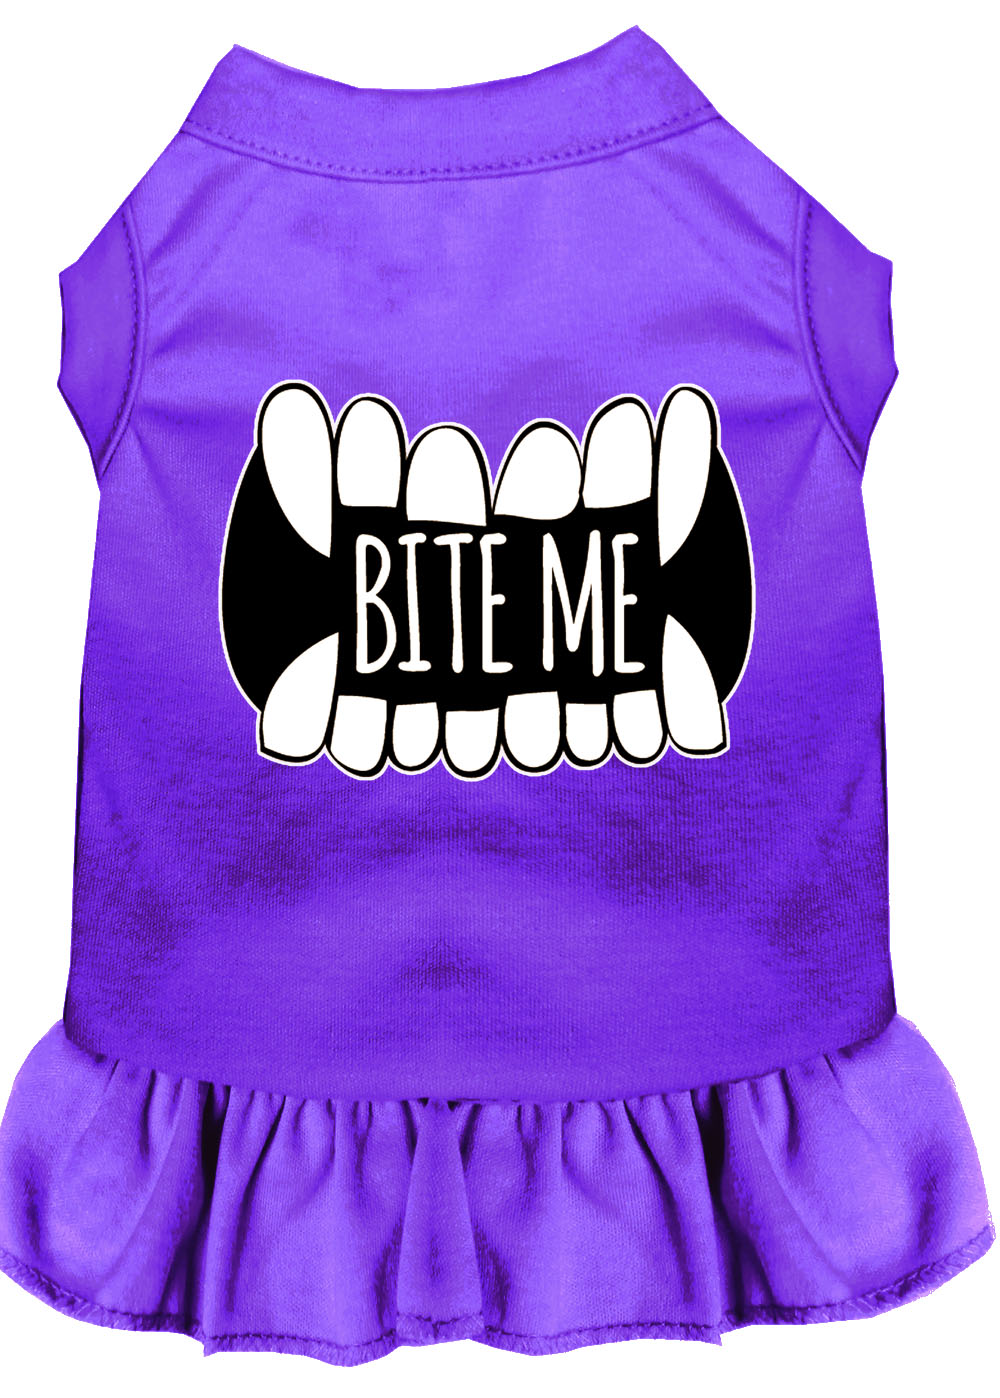 Bite Me Screen Print Dog Dress Purple Lg